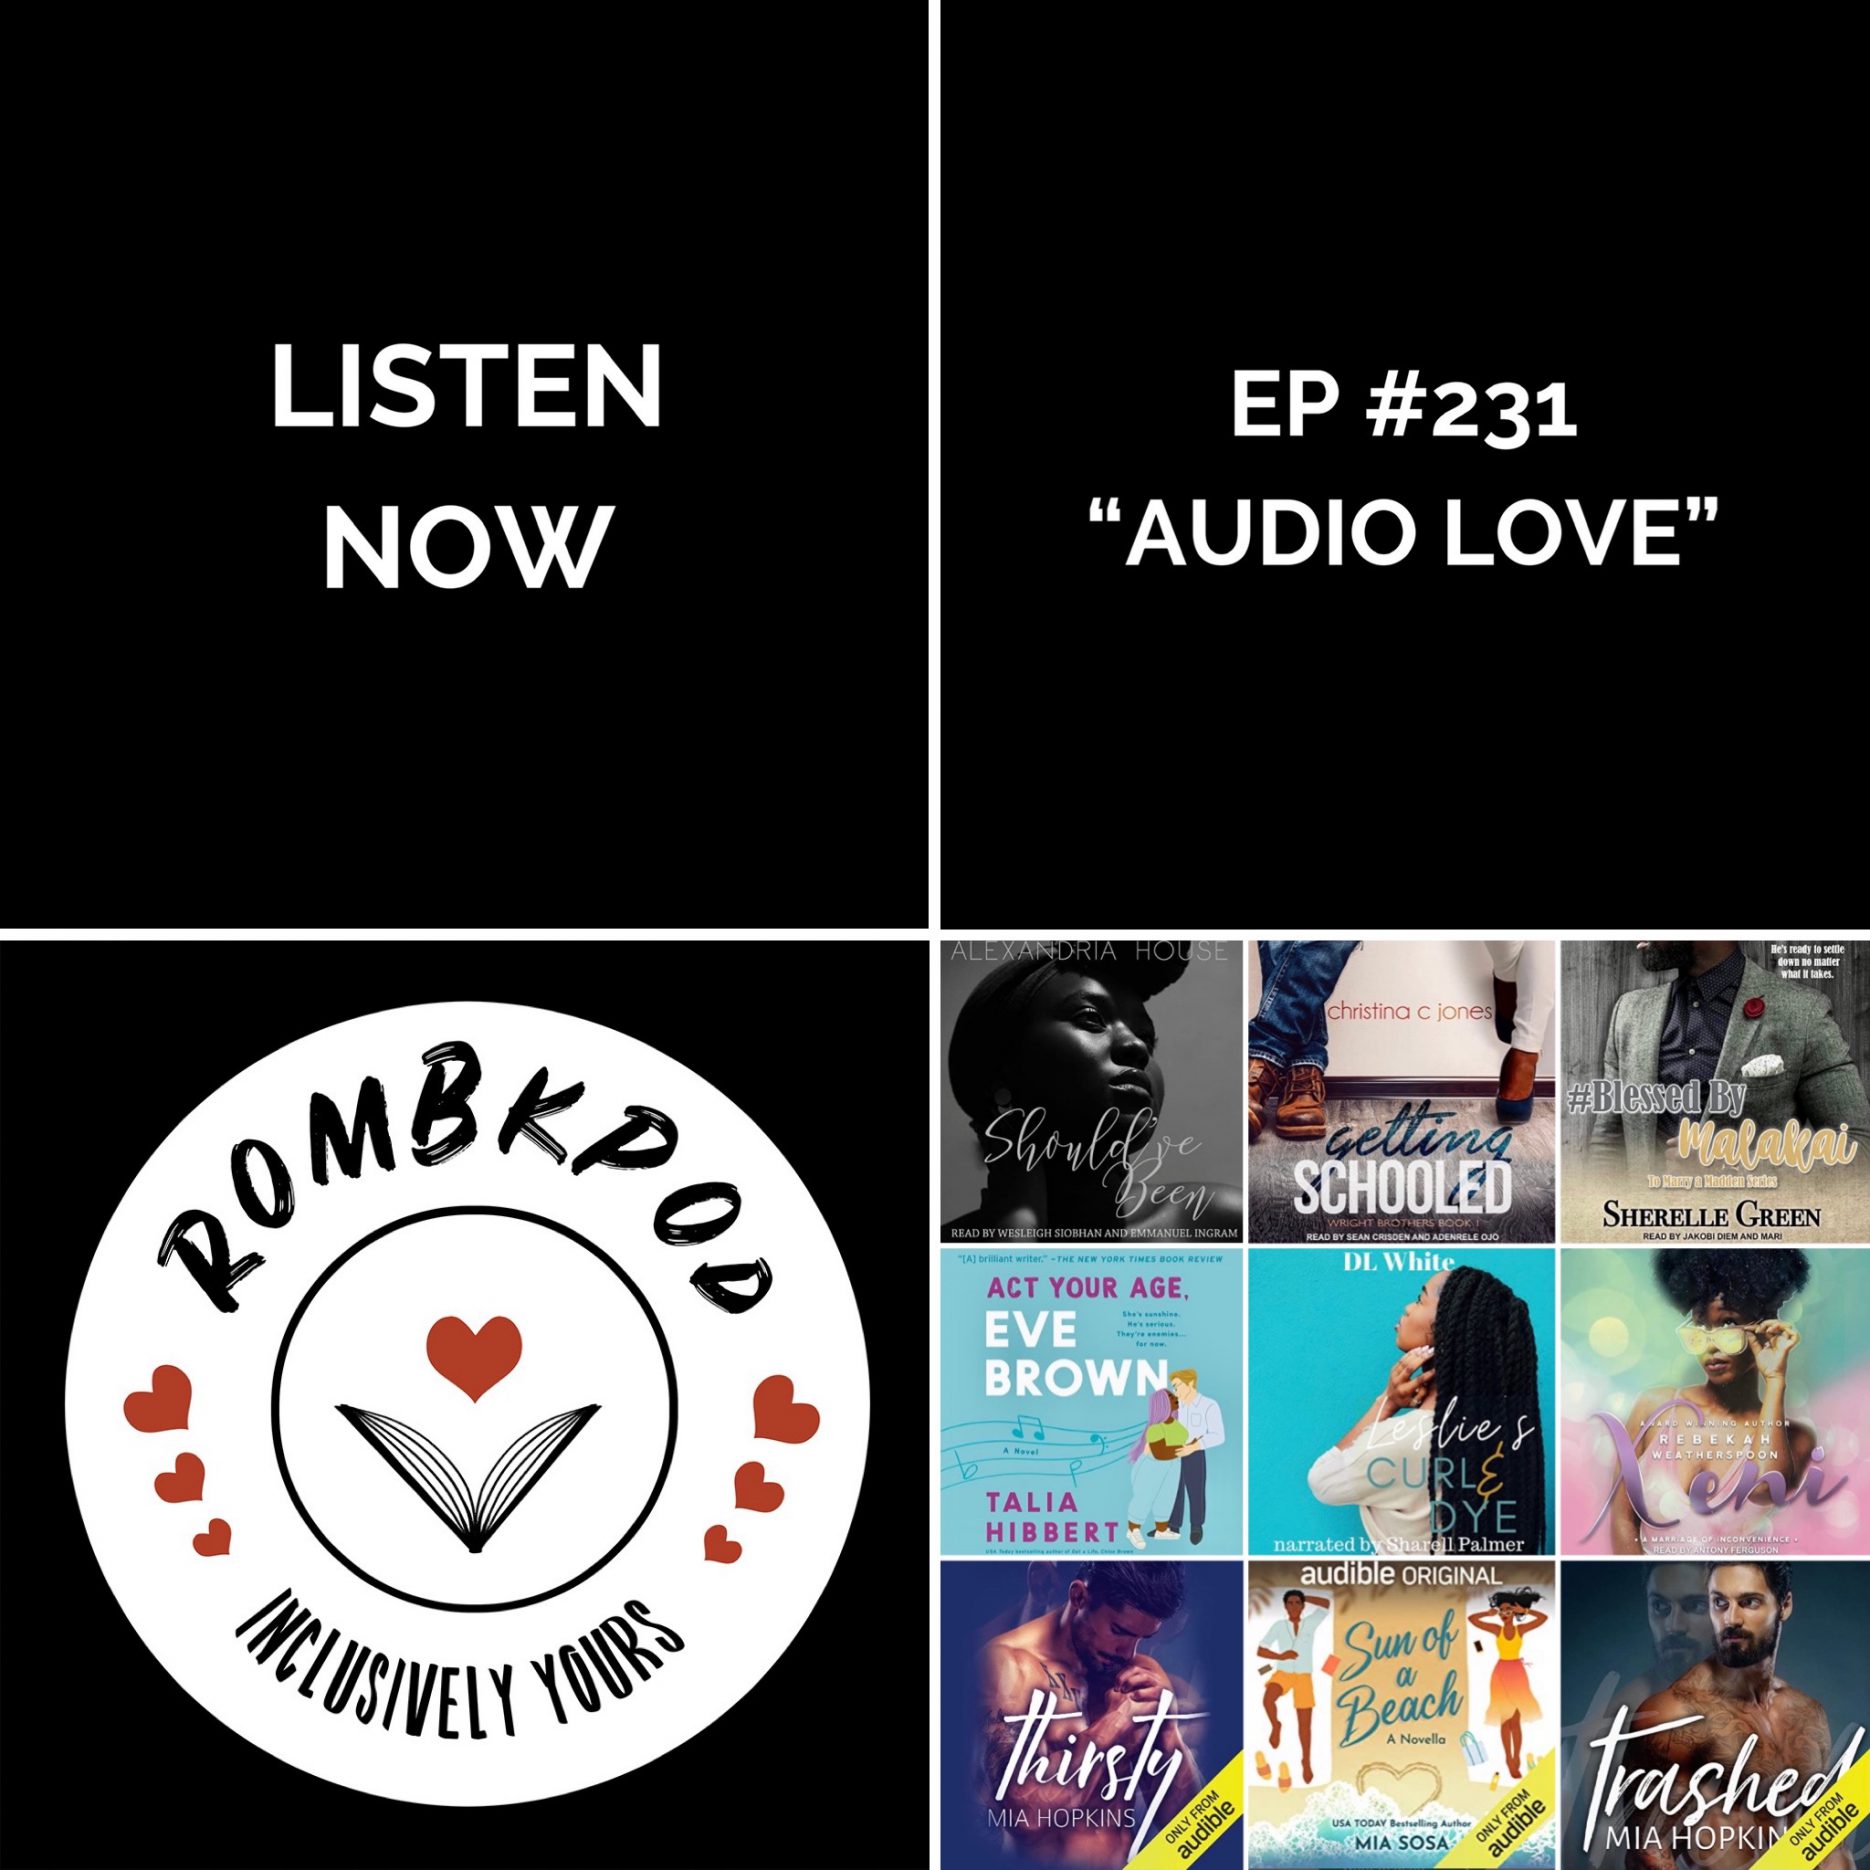 IMAGE: lower left corner, RomBkPod heart logo; lower right corner, ep #231 book cover collage; IMAGE TEXT: Listen Now, ep #231 "Audio Love"